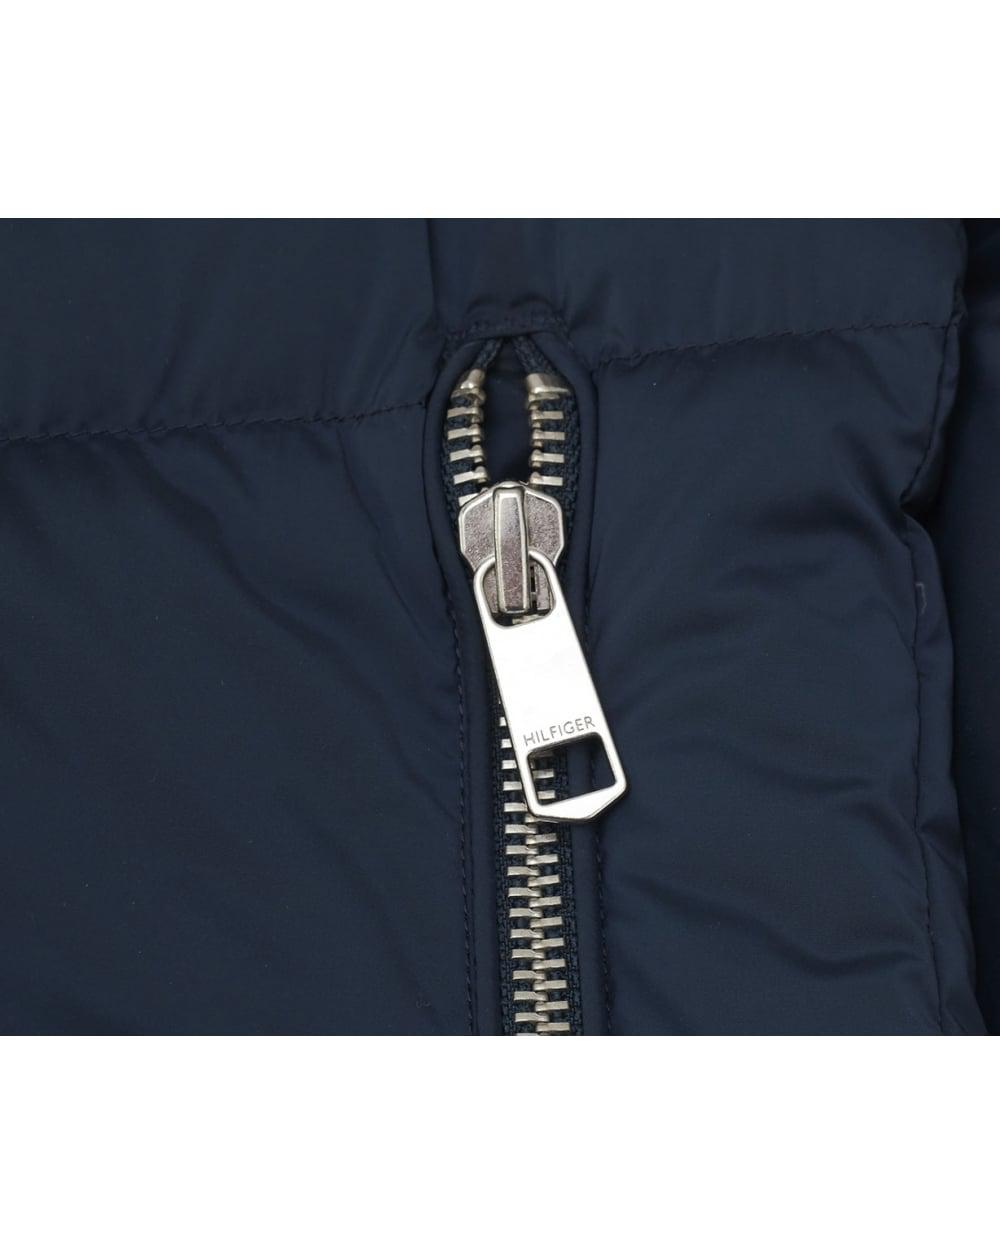 Tommy Hilfiger Callie Icon Down Jacket Flash Sales, 52% OFF |  aquavistahotels.com